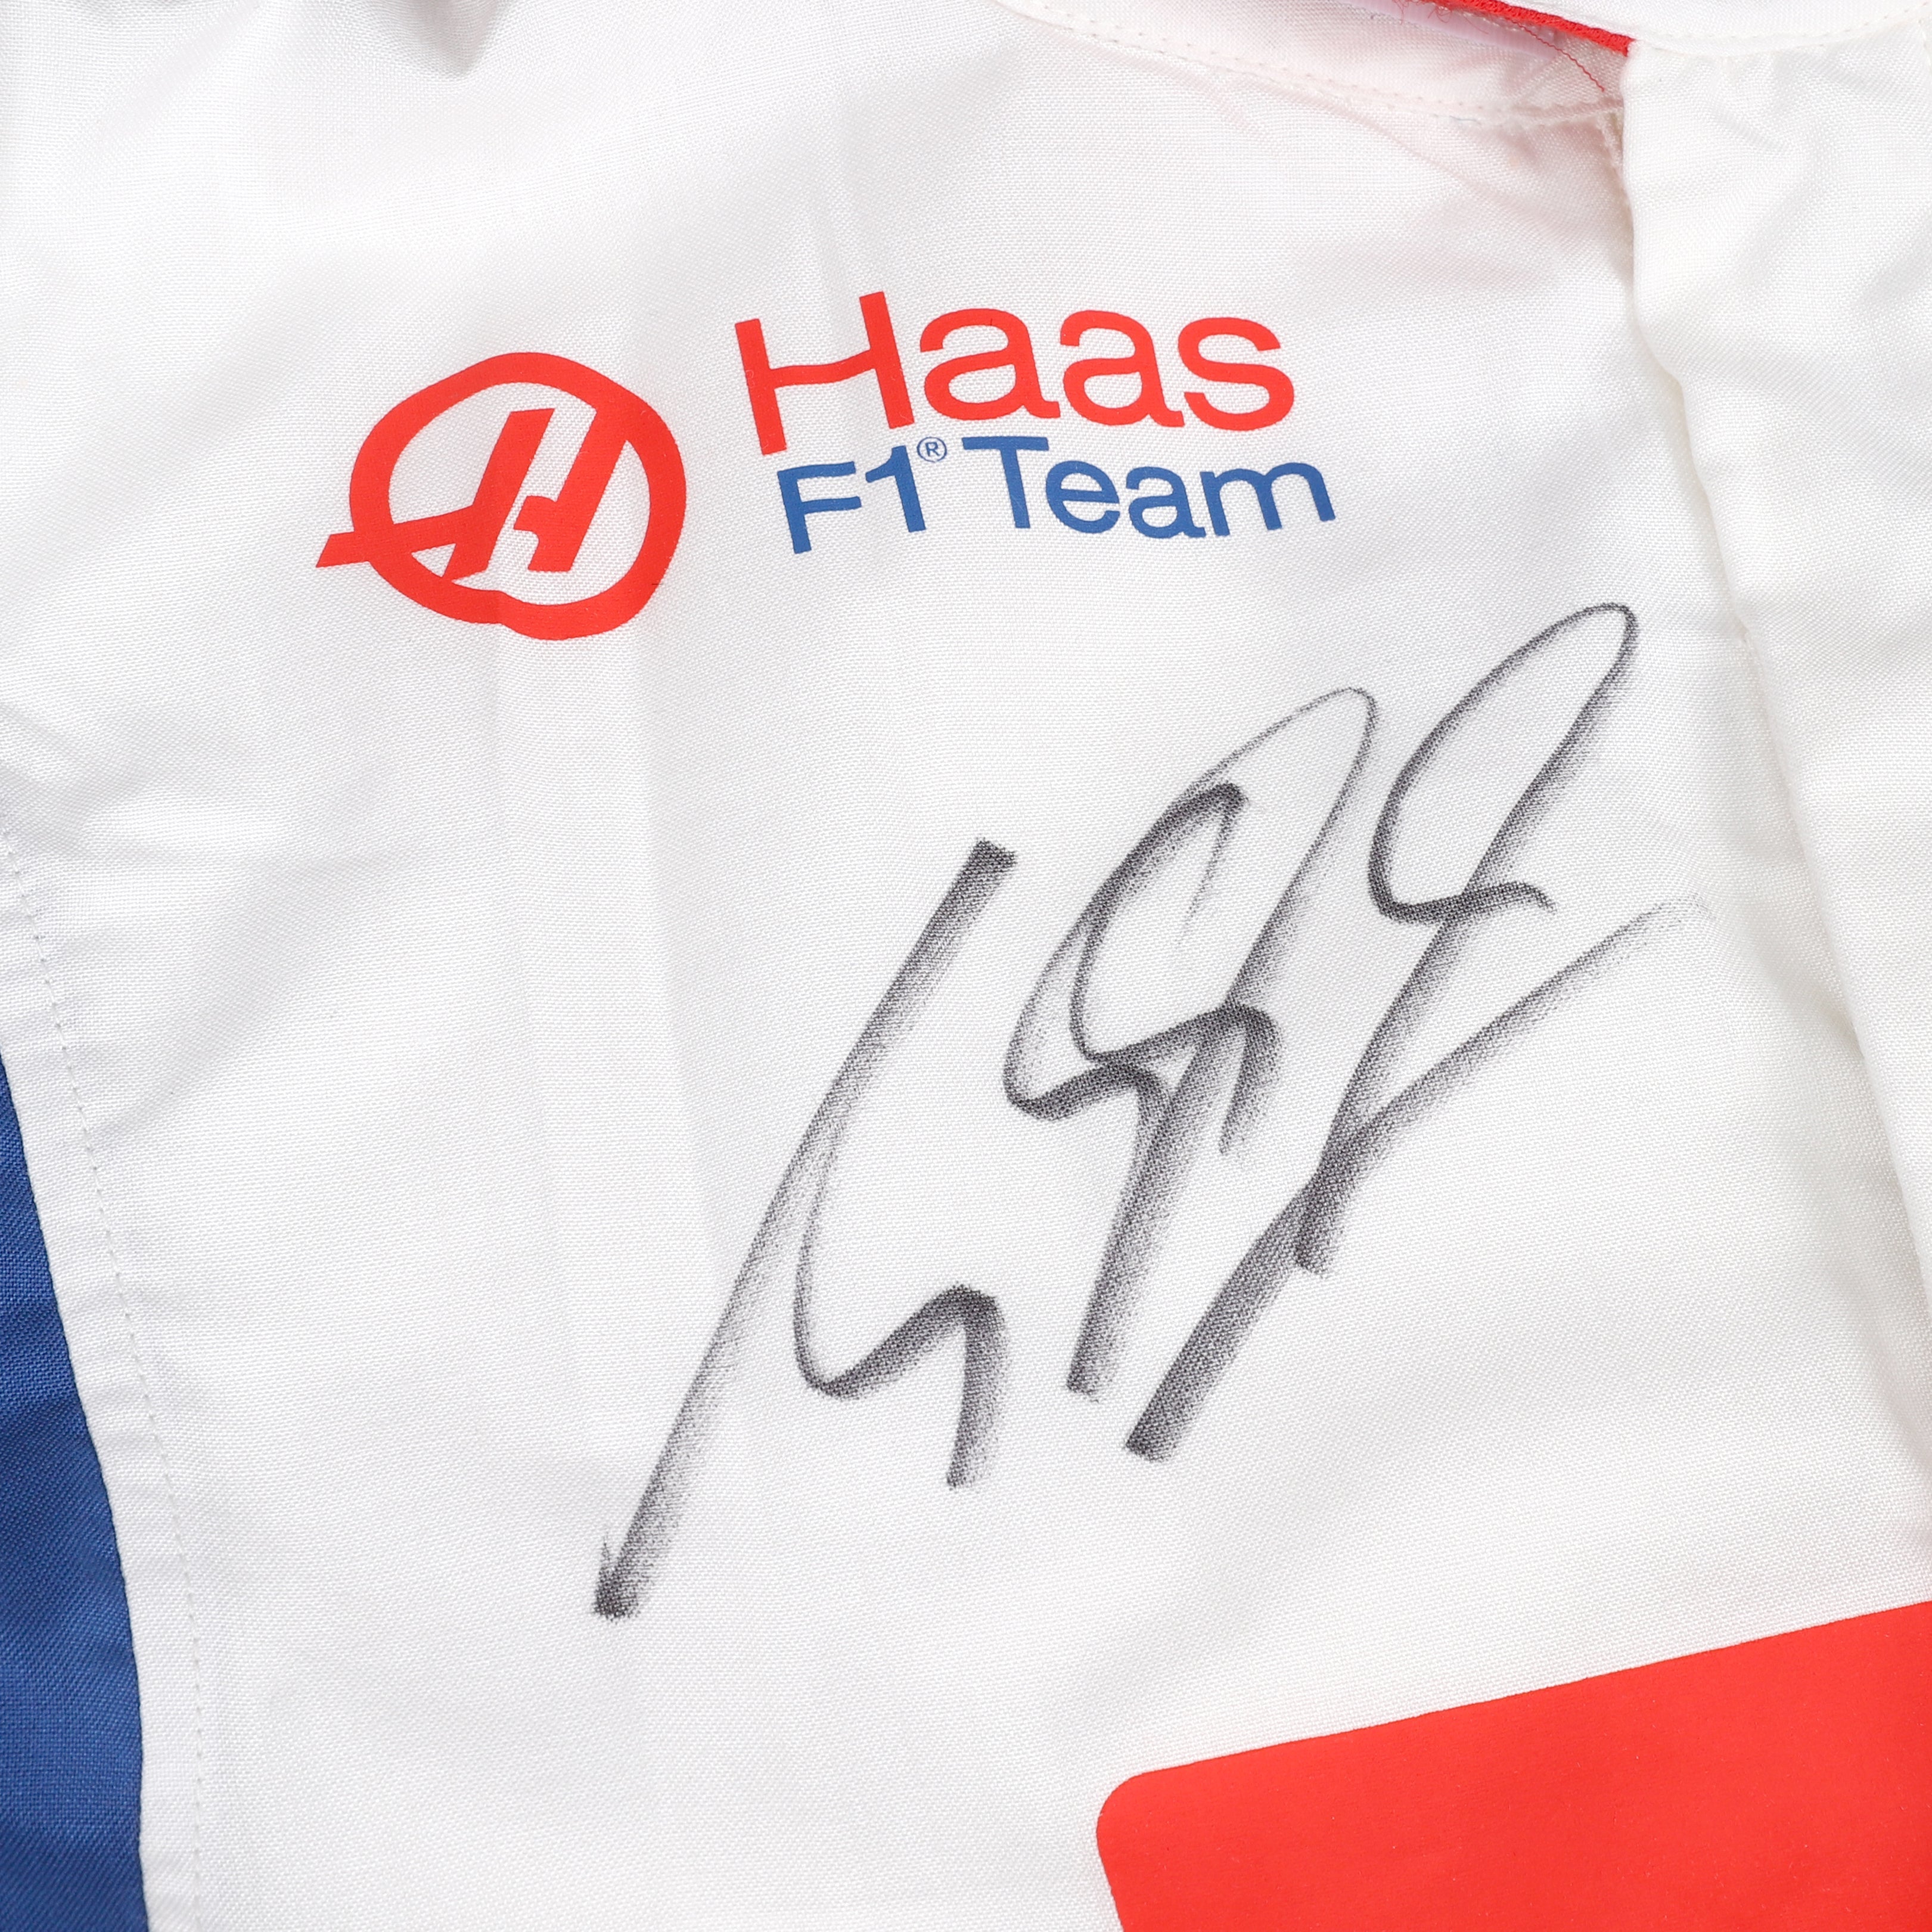 Mick Schumacher 2022 Signed Replica Haas F1 Team Race Suit